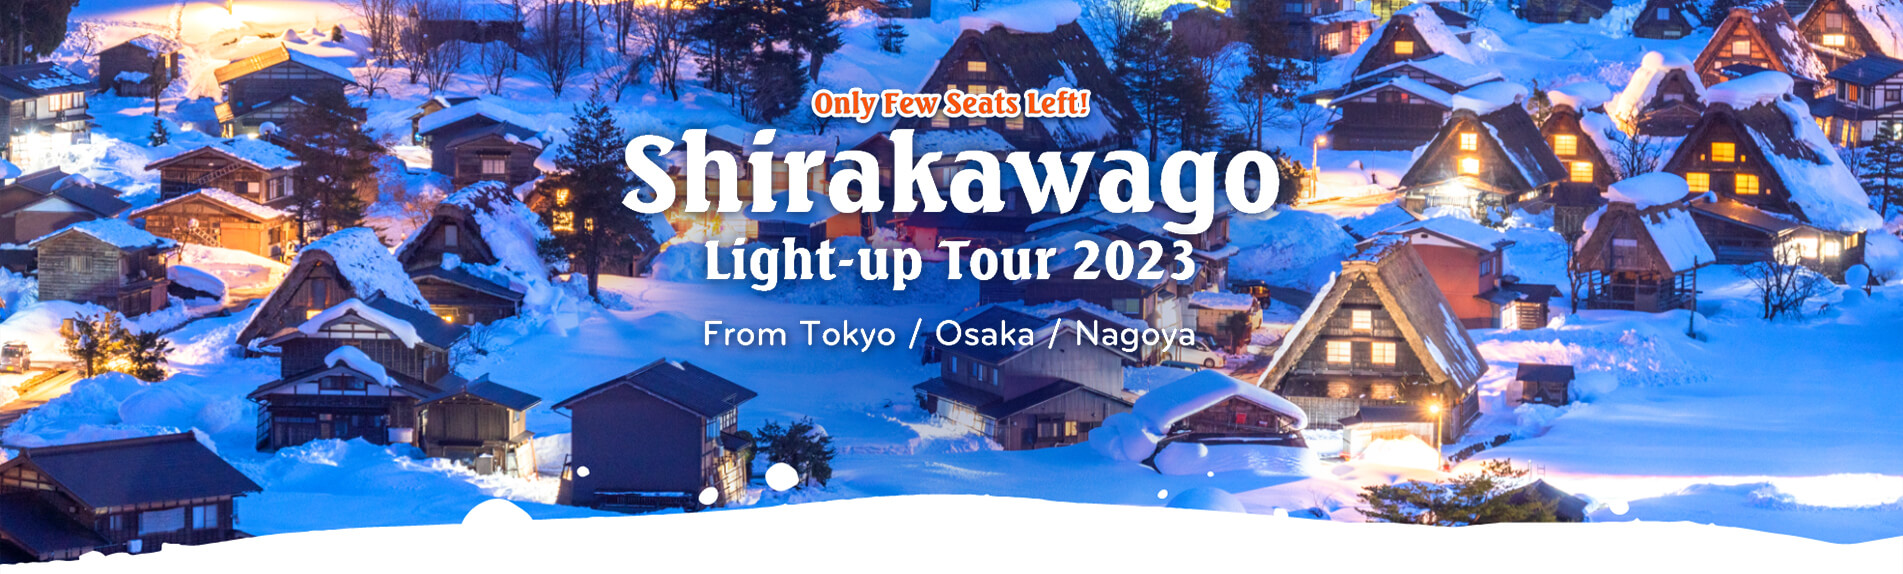 Shirakawago Light-up Tour 2023